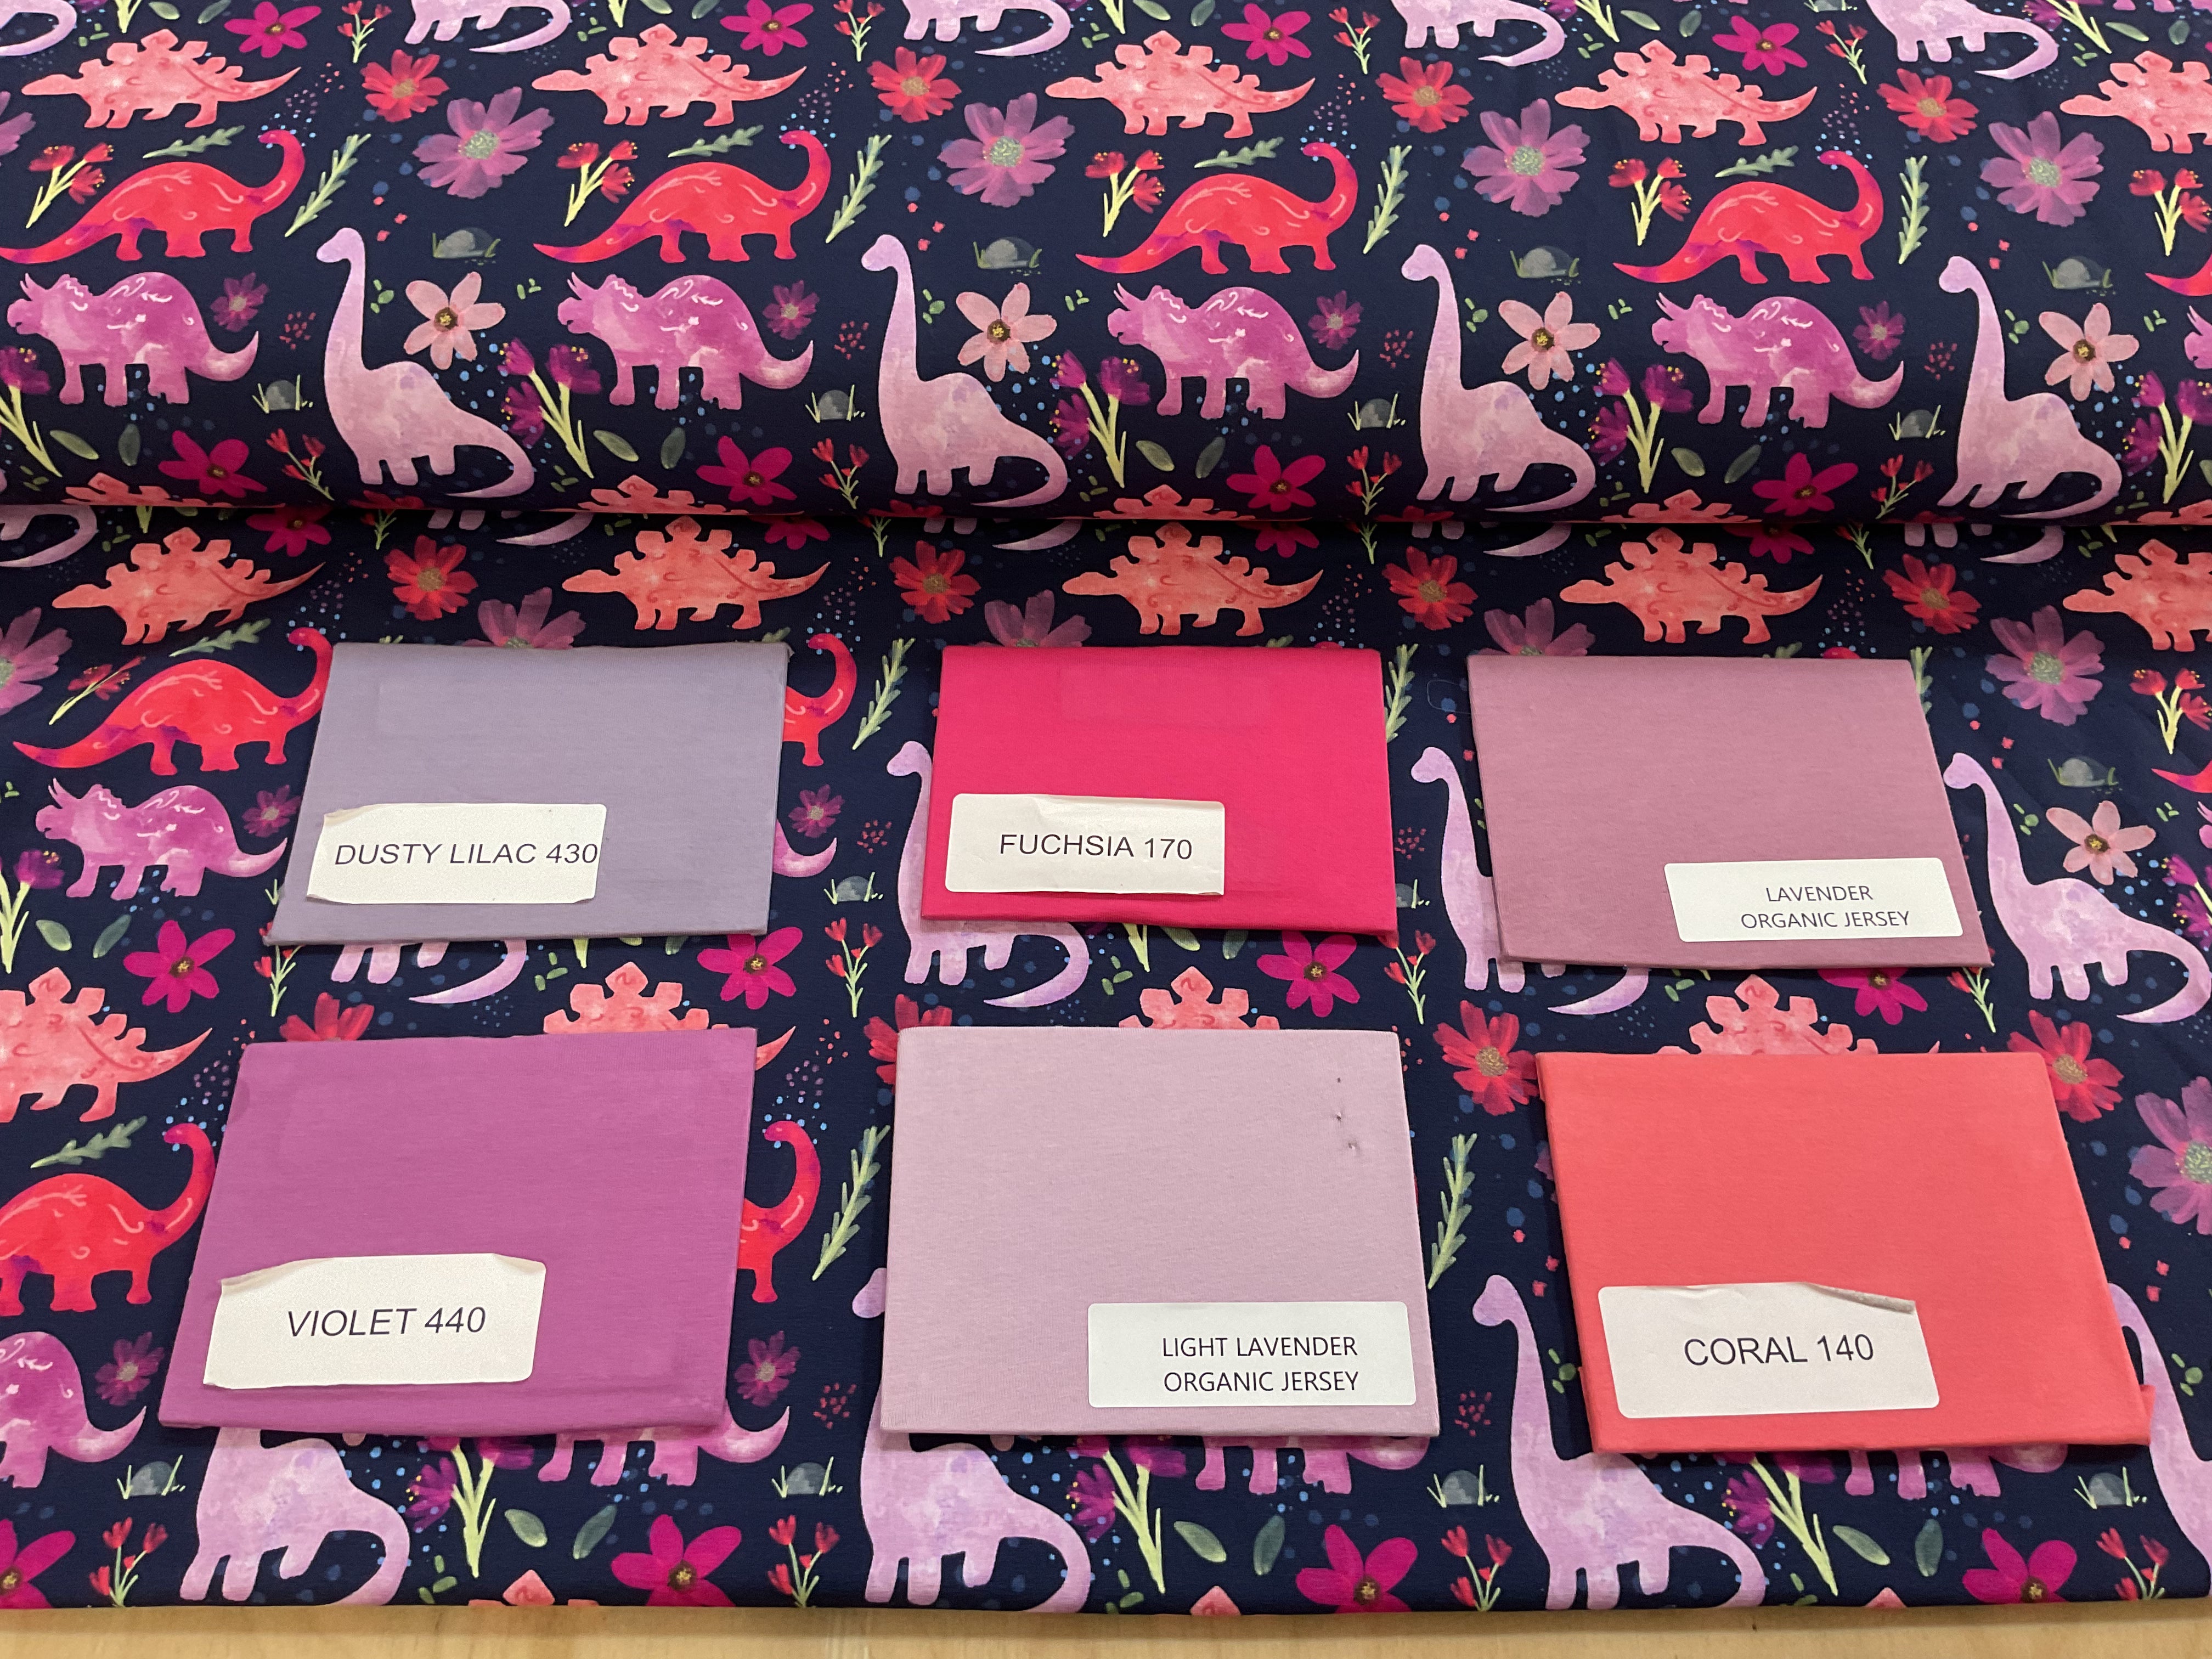 Pink Dinosaur Flowers on Navy Cotton Jersey Fabric